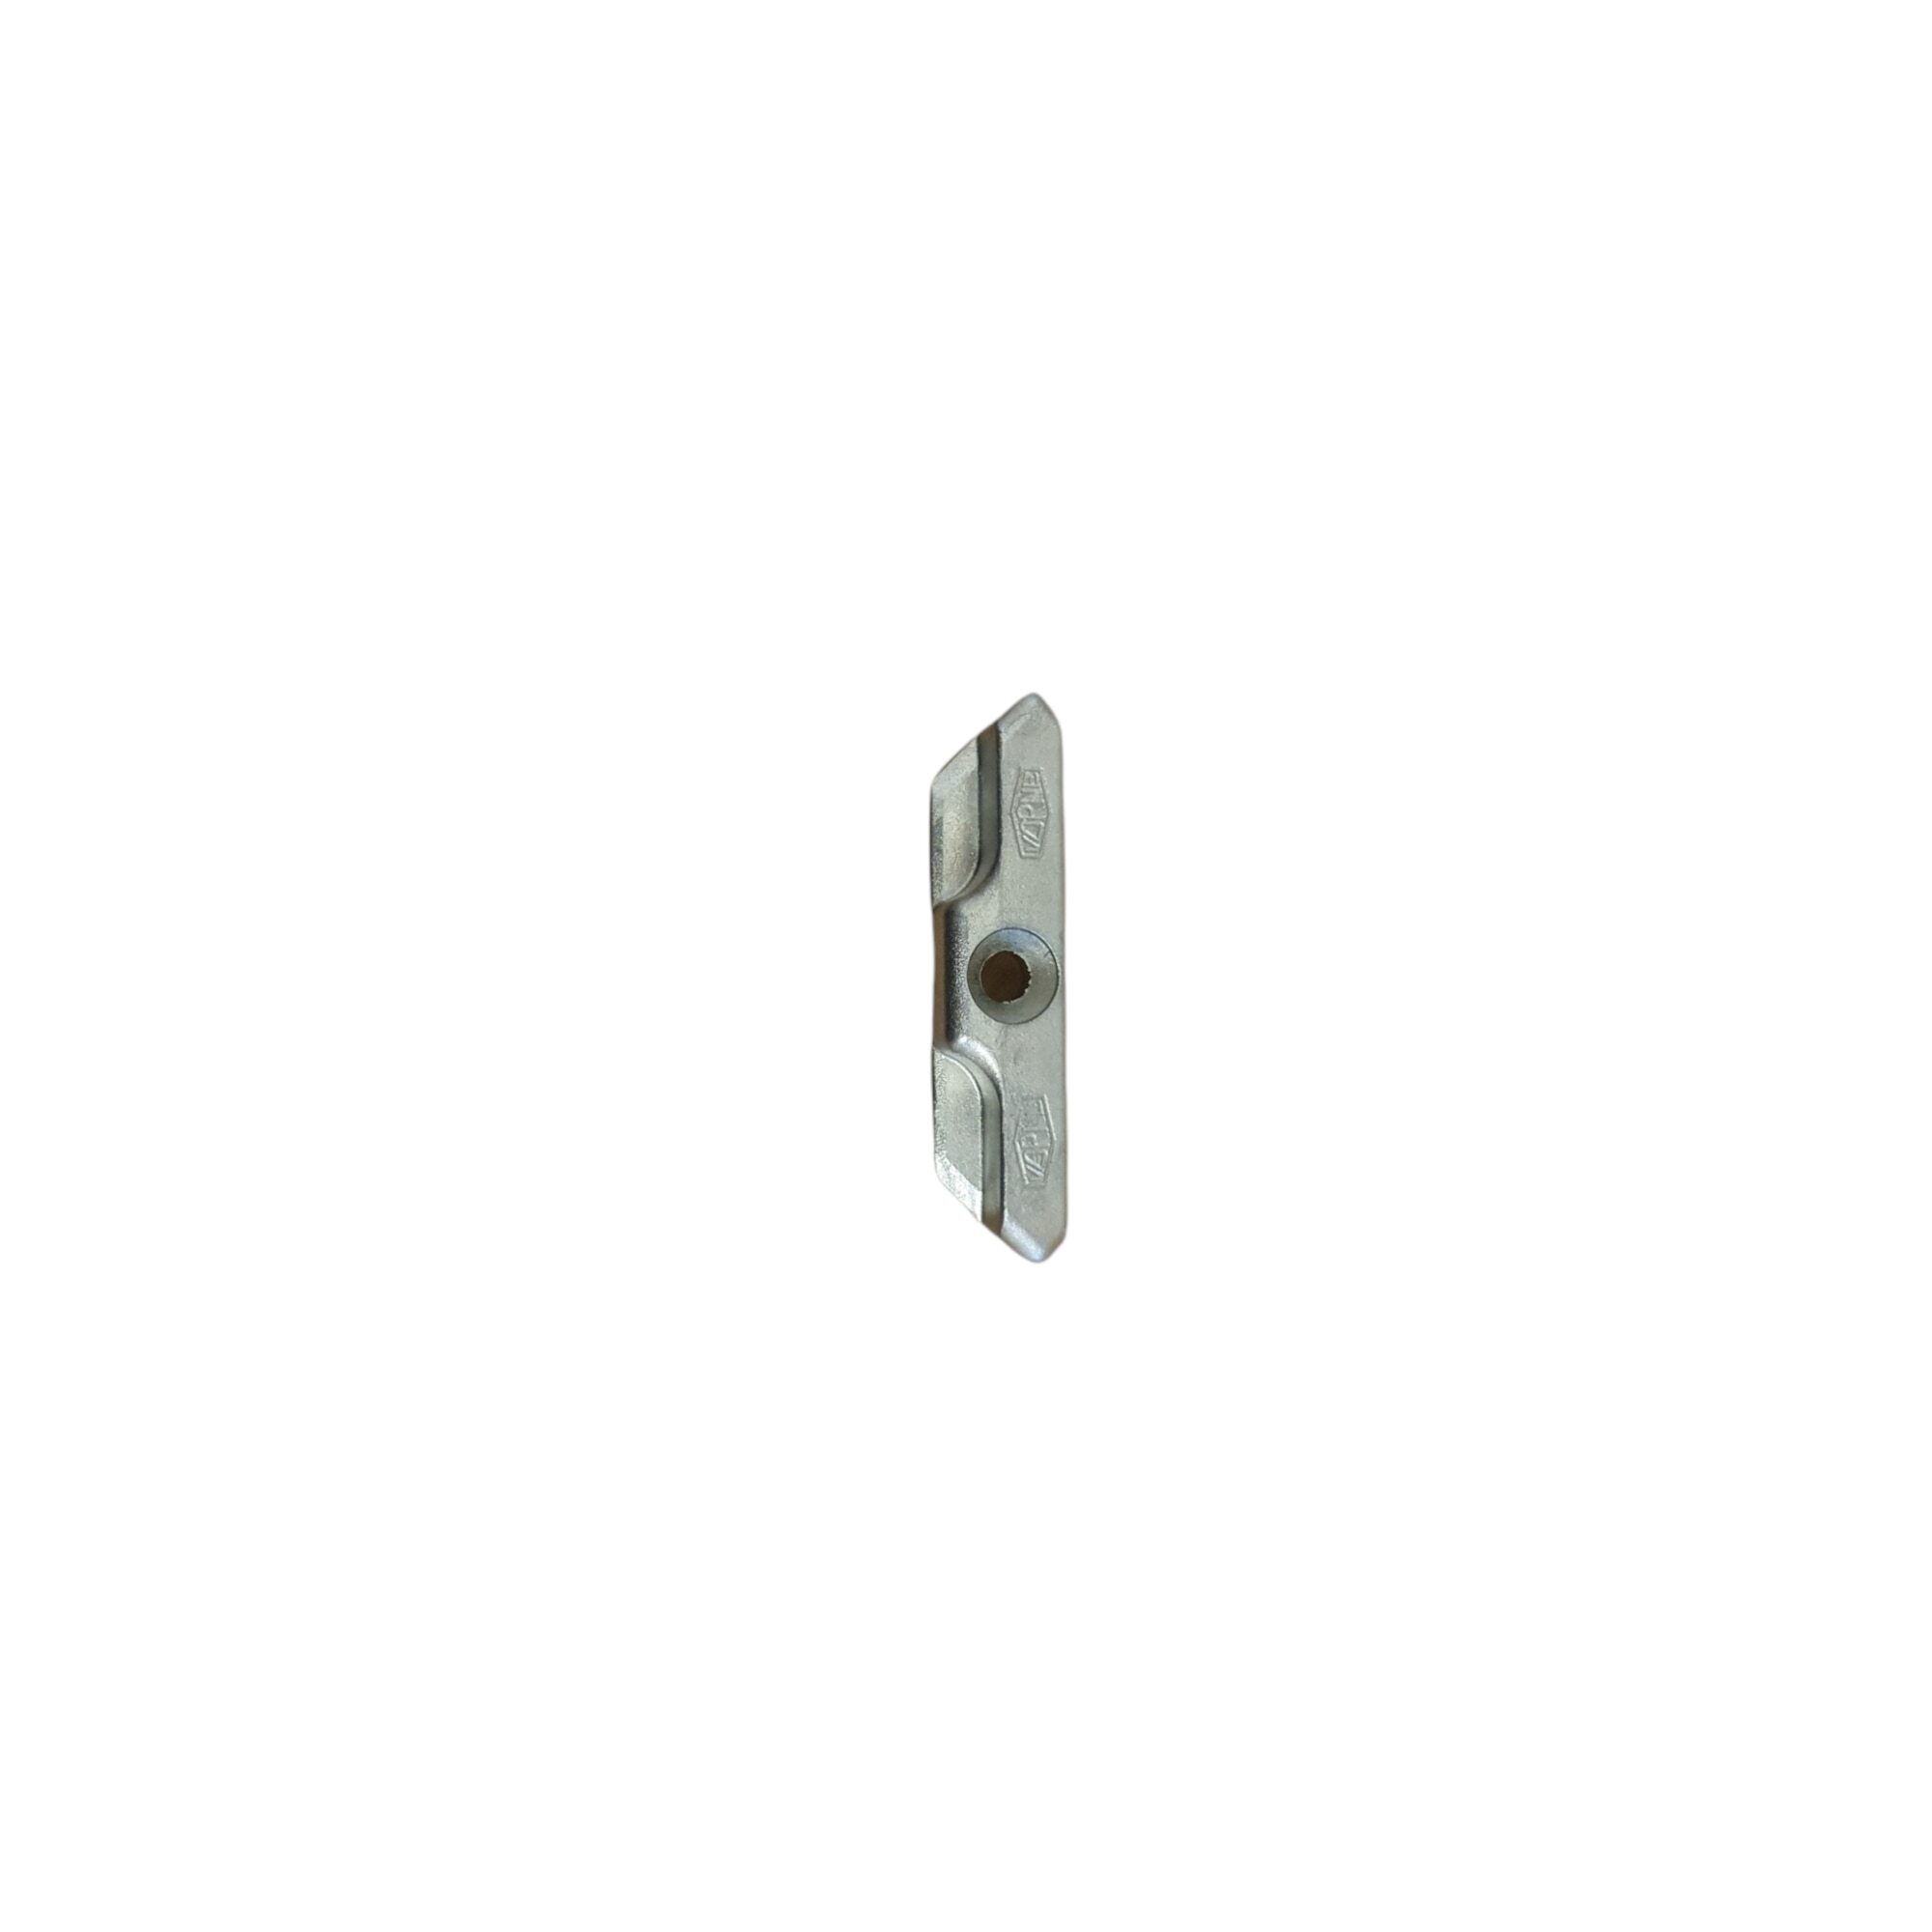 Placuta-inchidere-toc-Vorne-tamplarie-PVC-falt-profil-13mm-lux-pvc.jpg